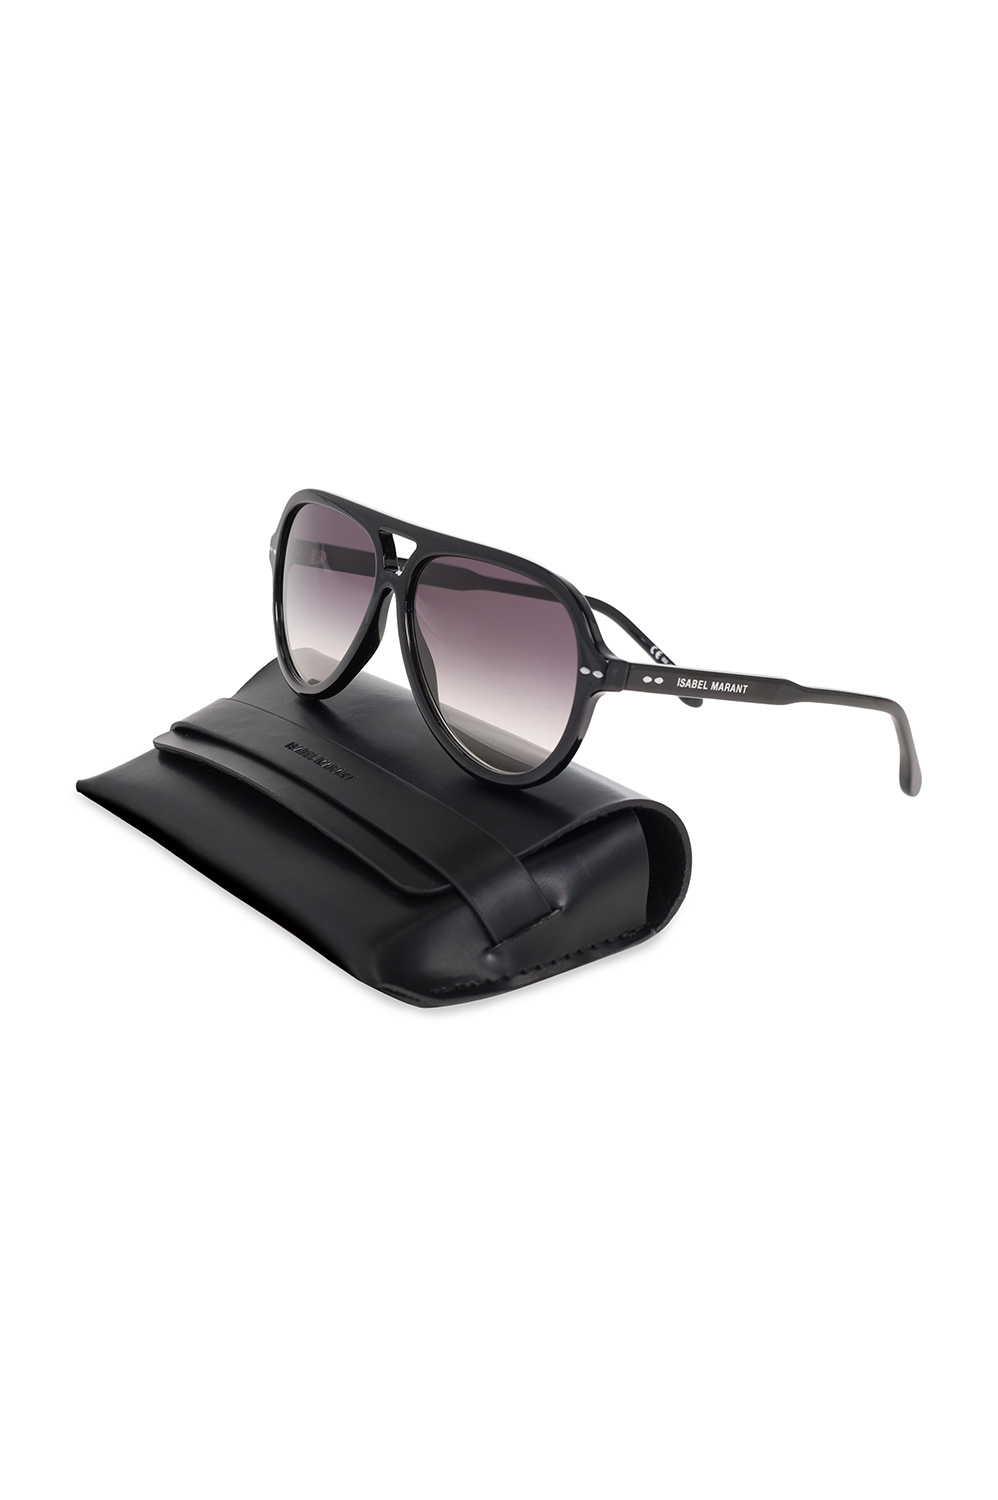 Isabel Marant pink sunglasses METAL PLAQUE EVOLUTION PR 56VS